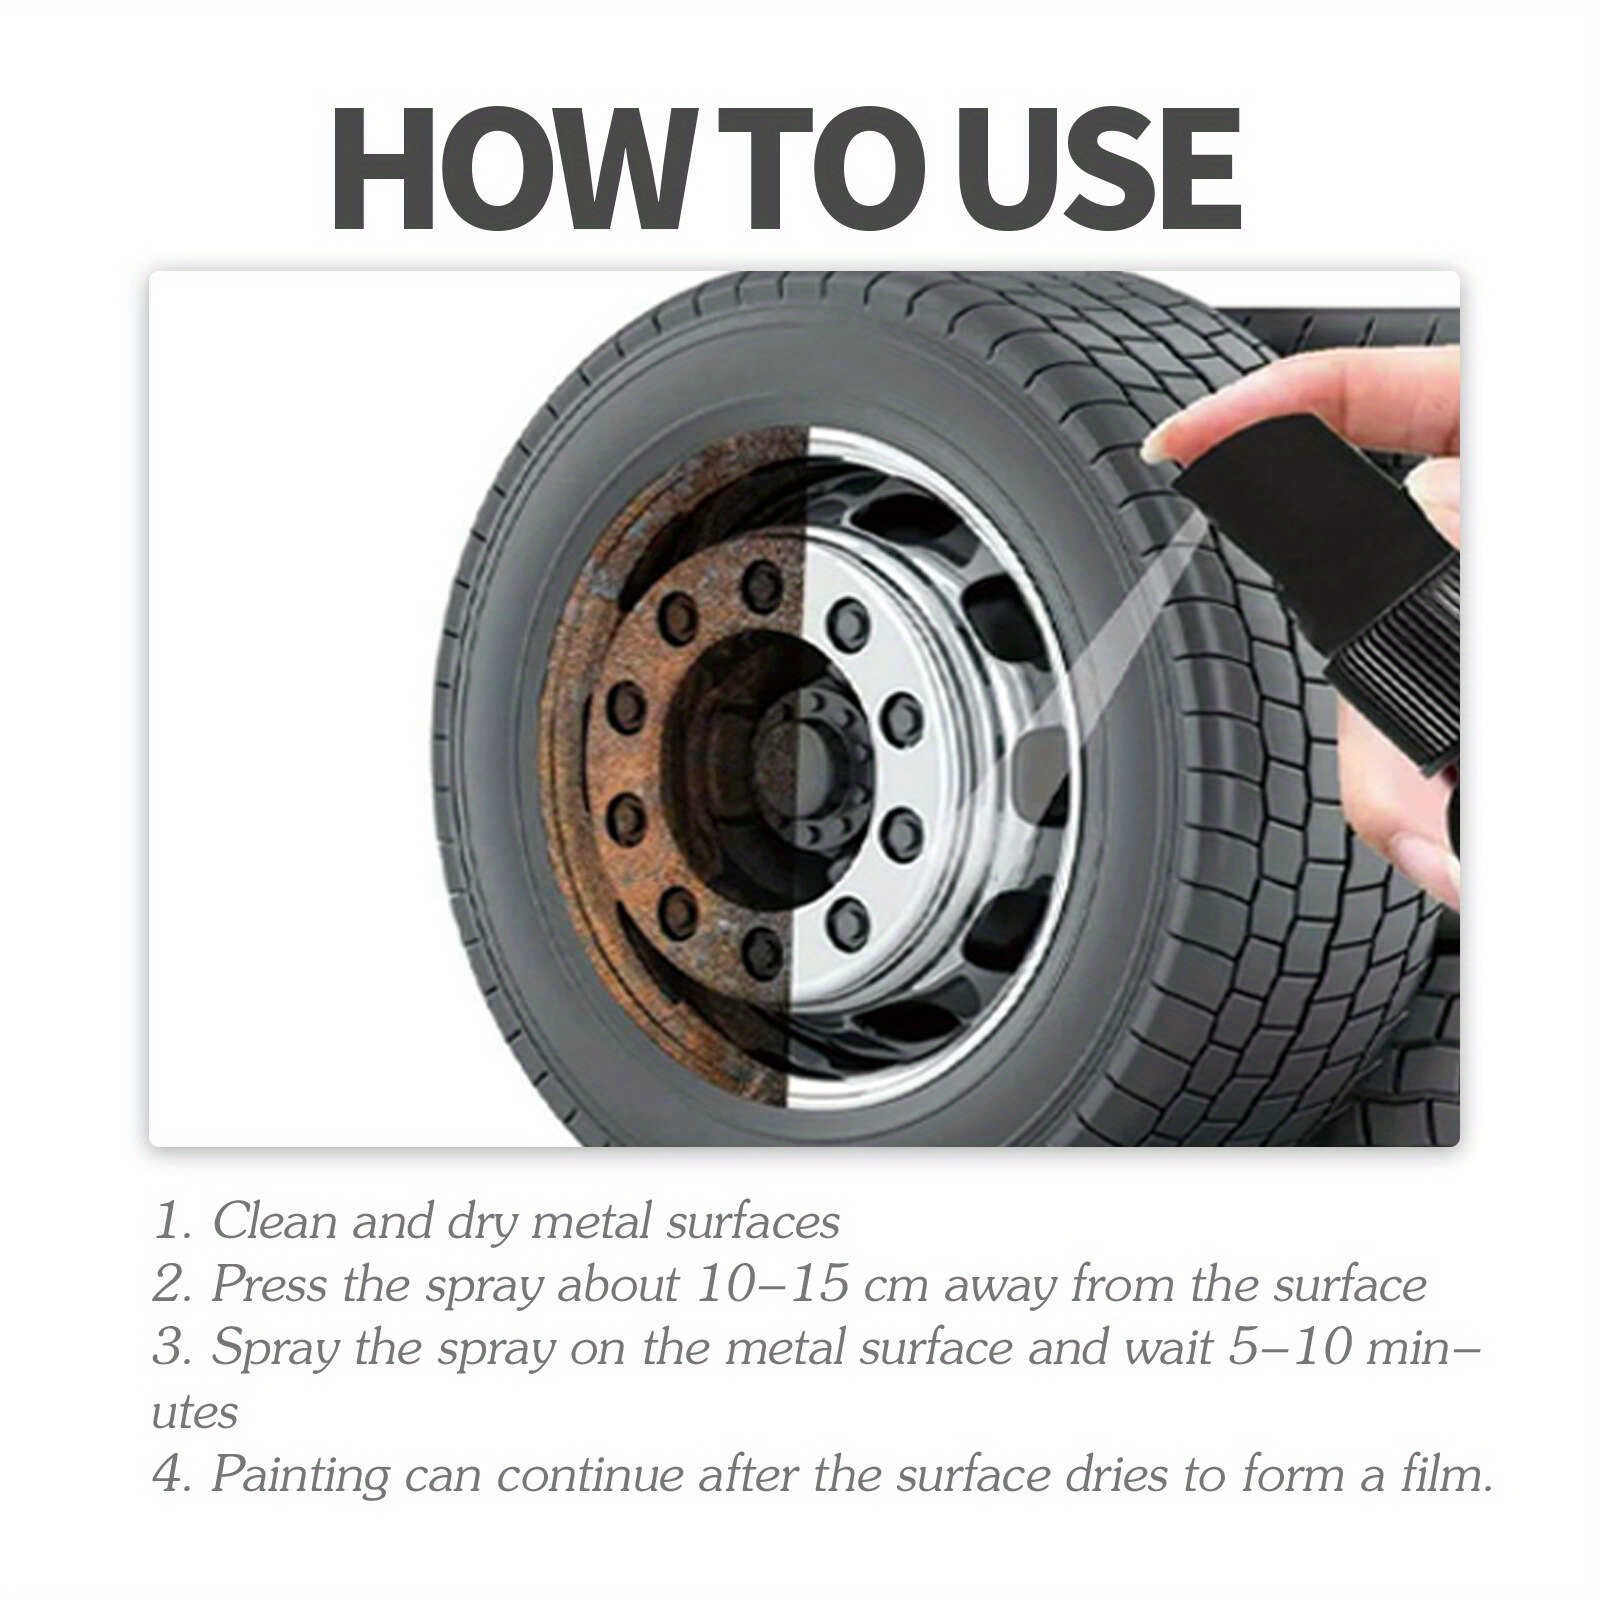 1pc 30ml Metal Rust Prevention Spray Car Hub Tire Metal Parts Cleaning  Refurbishment Rust Removal Spray